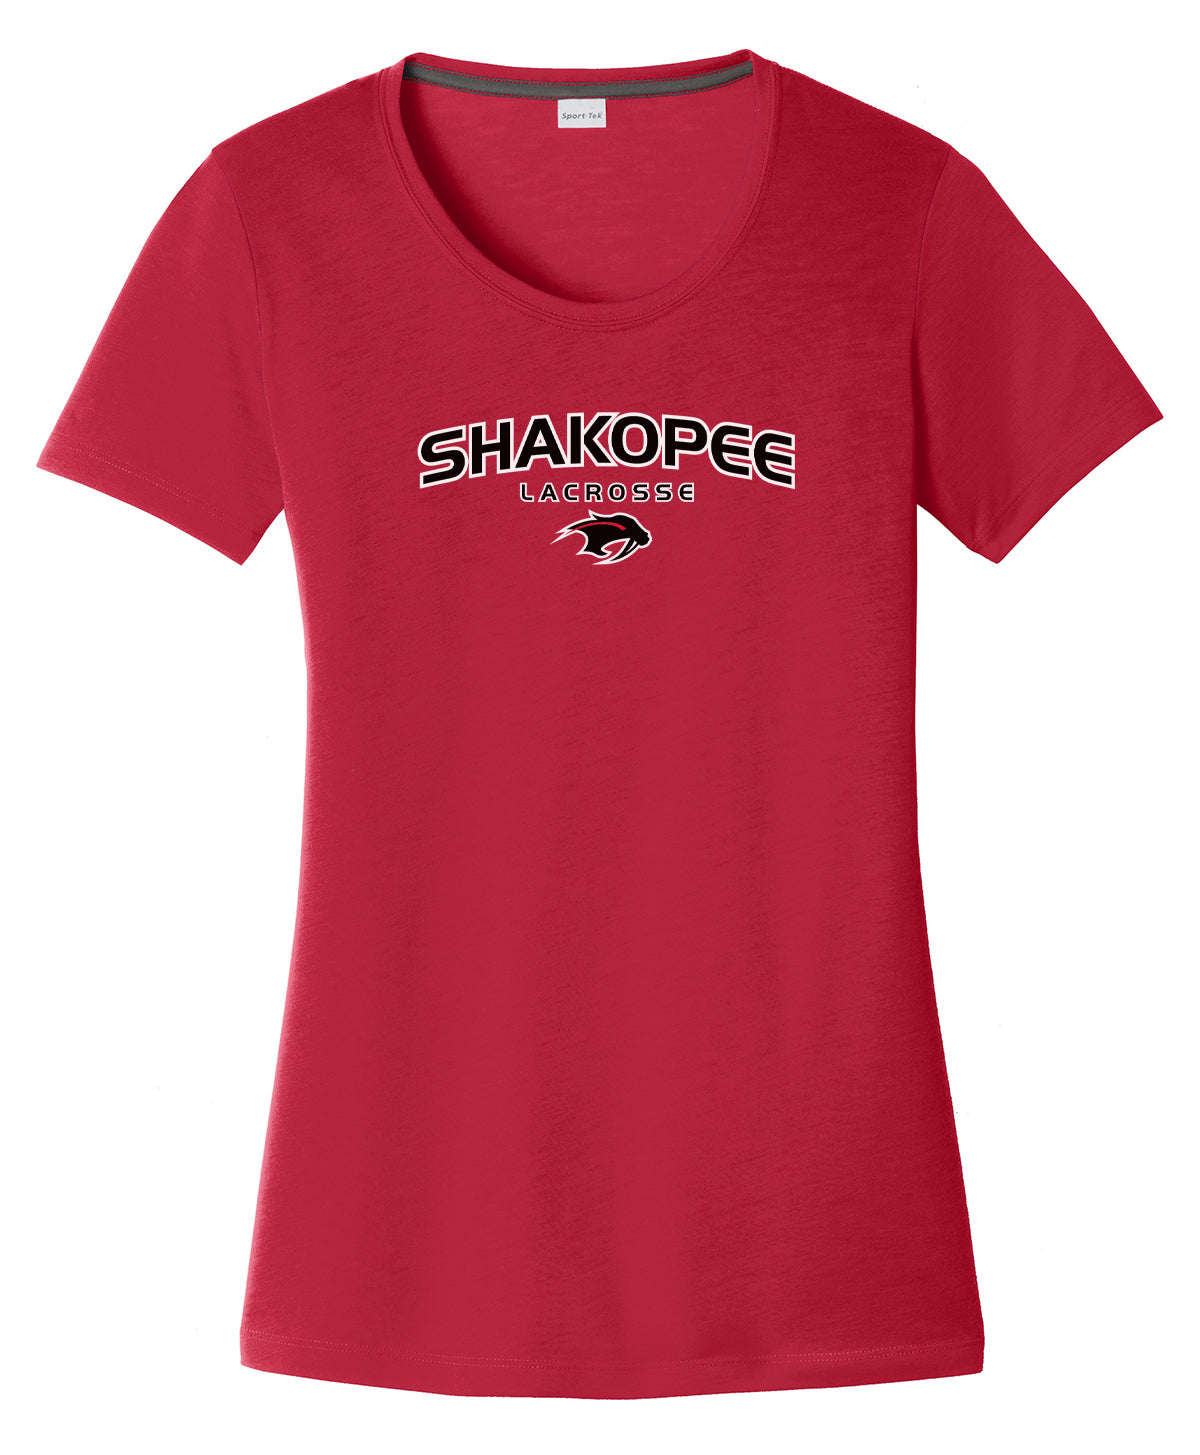 Shakopee Lacrosse Women's CottonTouch Performance T-Shirt